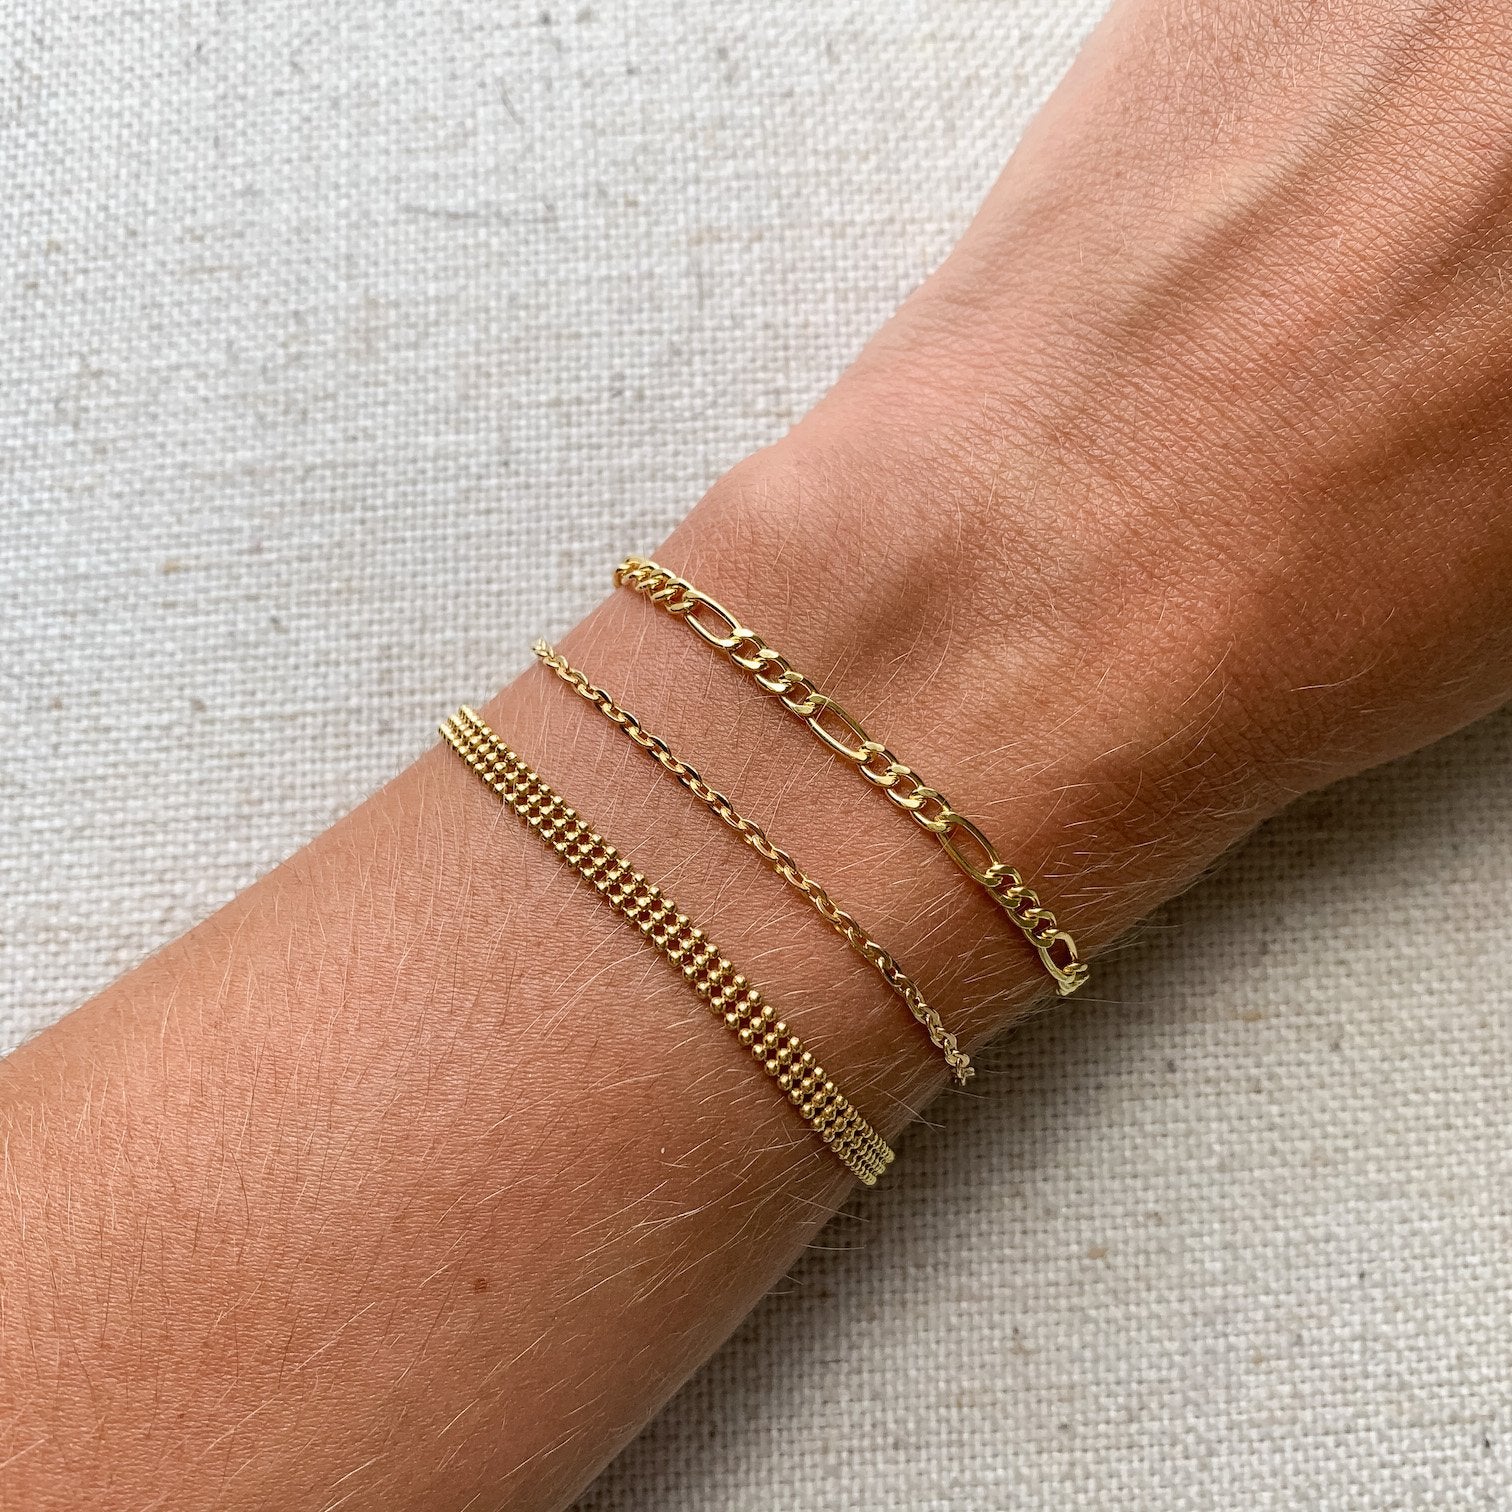 14k gold bracelet chains classic styles stackable boho chic kemmi cjewel;ry